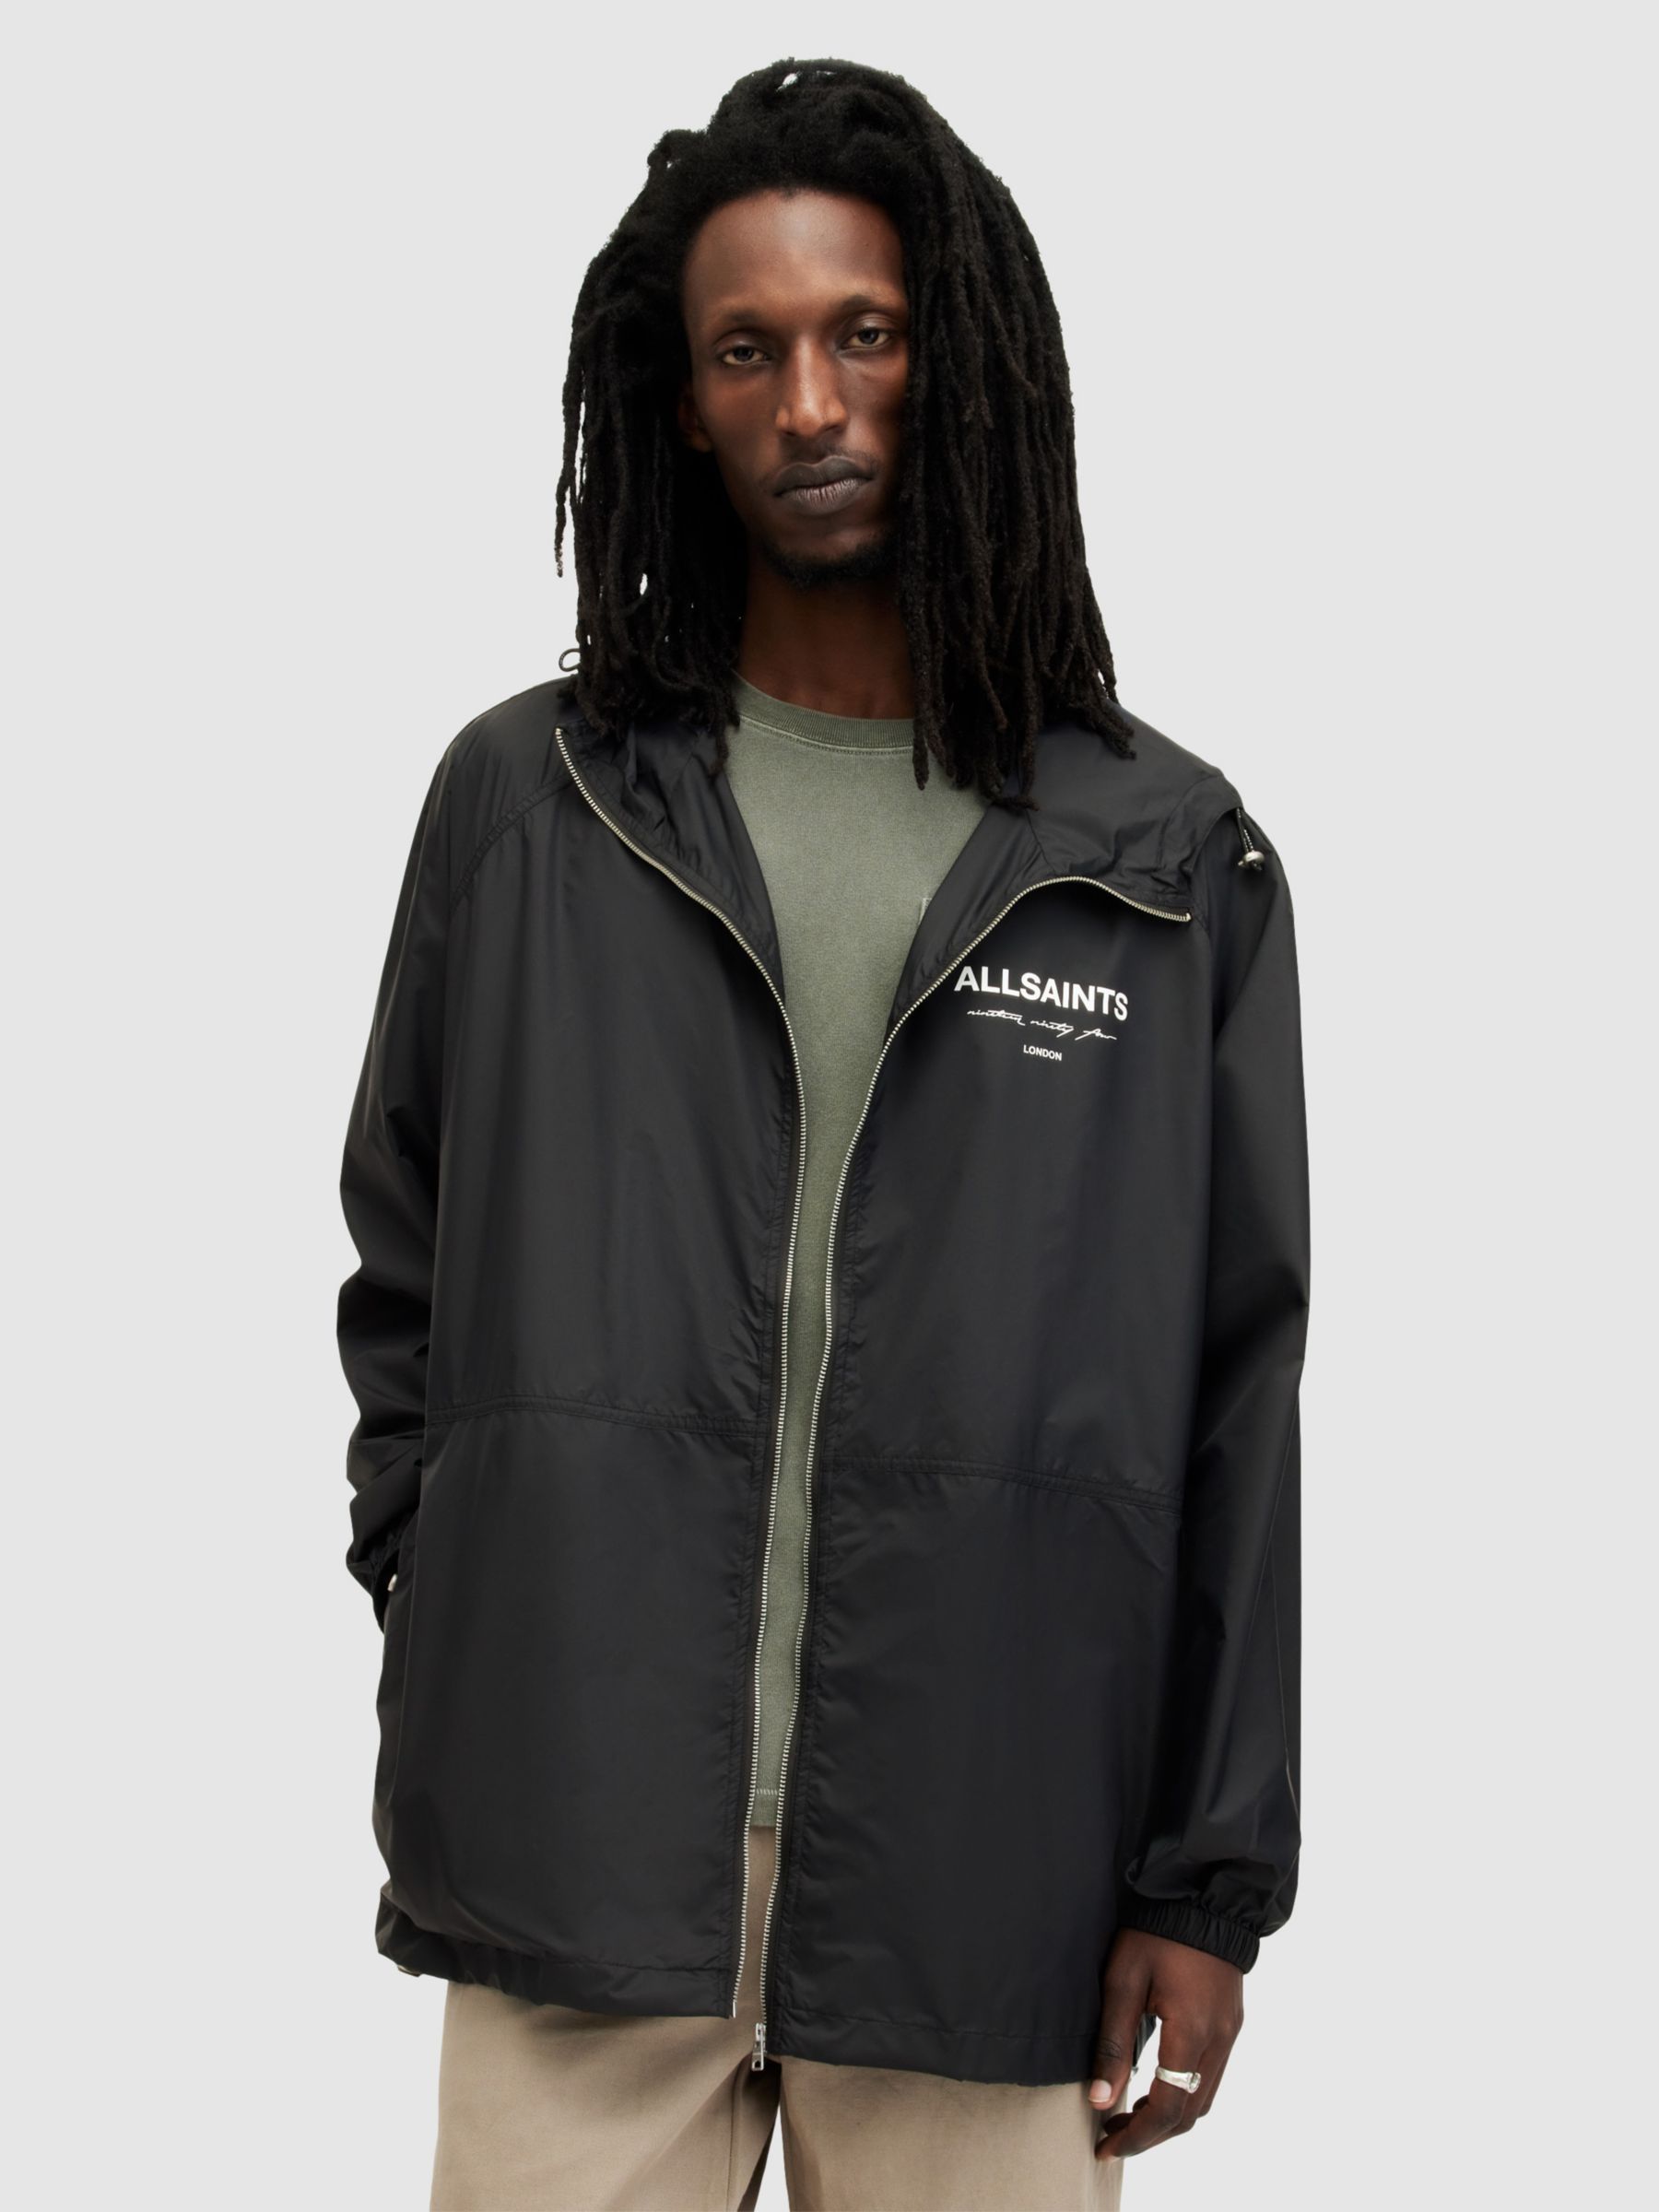 AllSaints Underground Jacket, Black, L